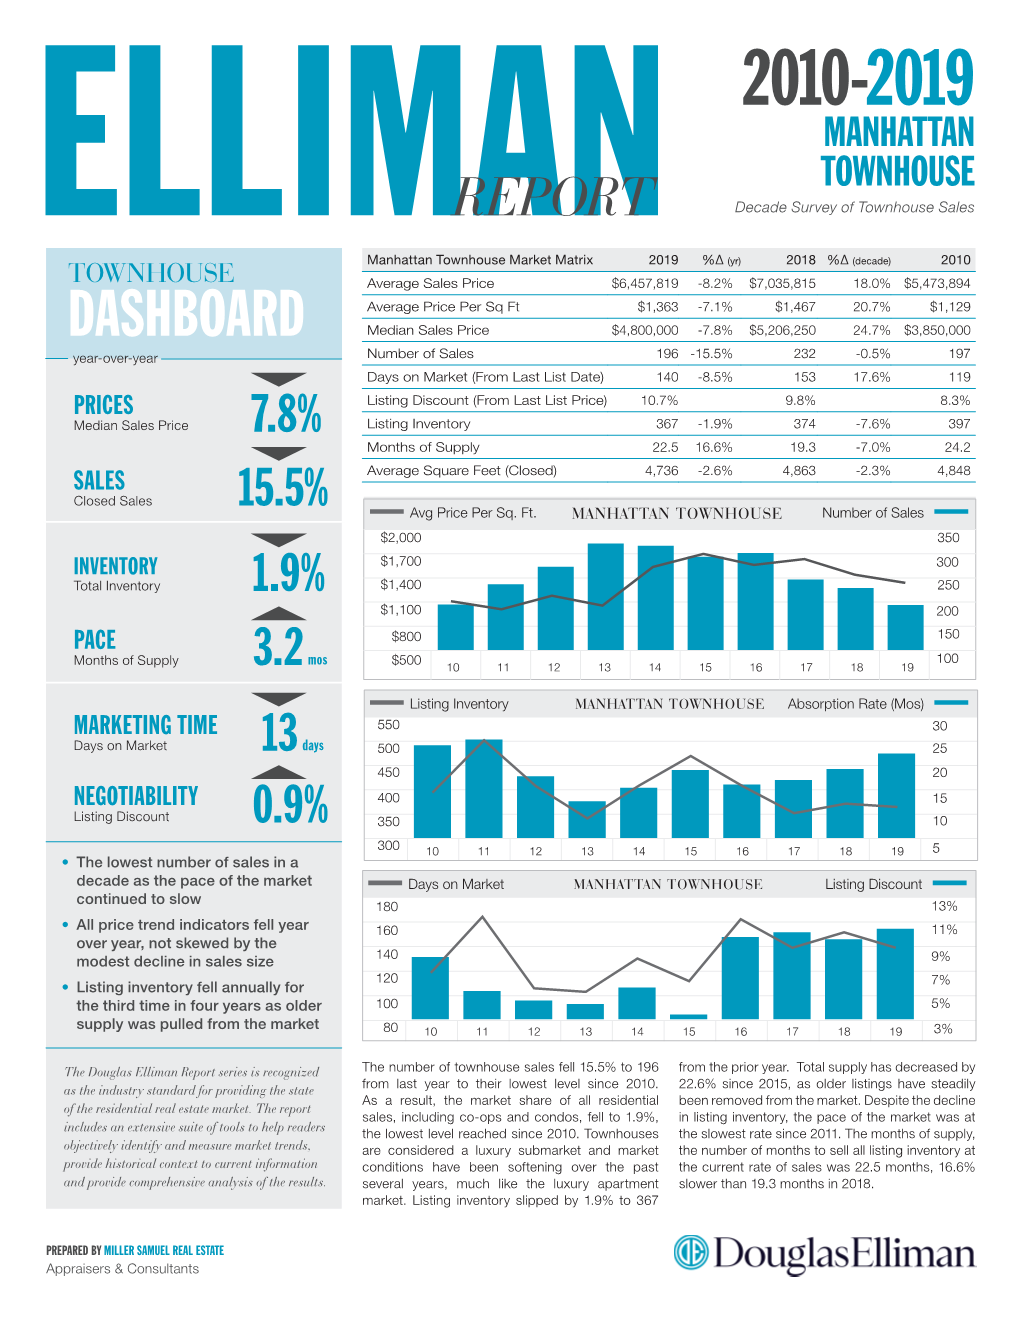 The Elliman Report: 2010-2019 Decade Manhattan Townhouse